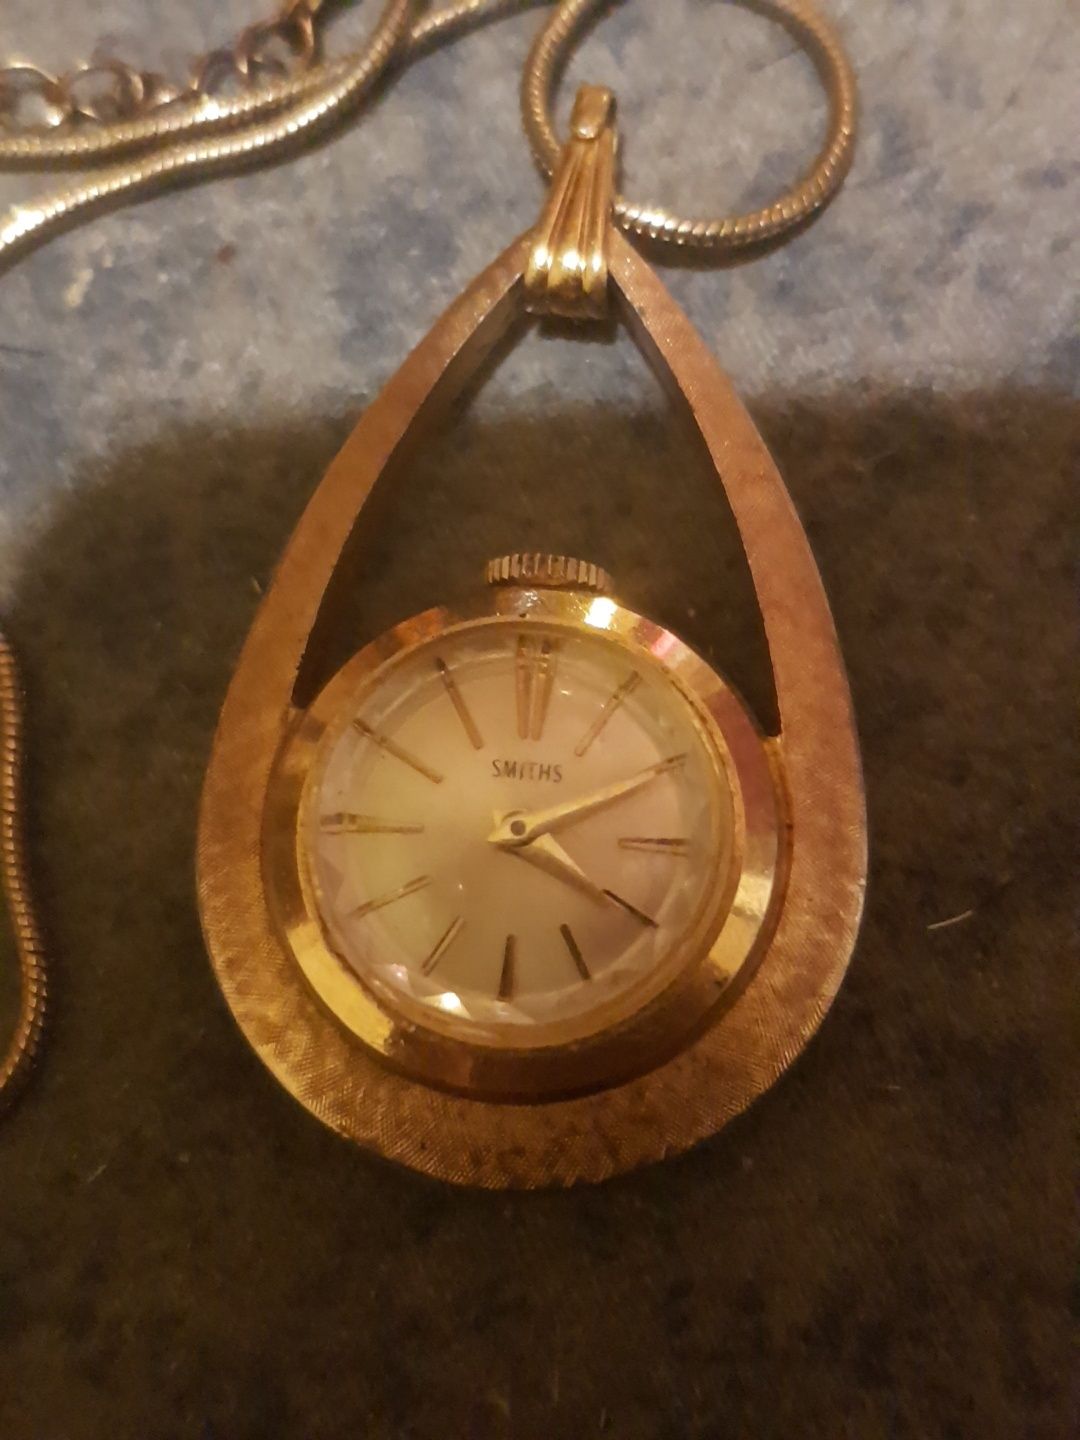 Superb ceas de dama bijuterie pandantiv placat aur Smiths mecanic